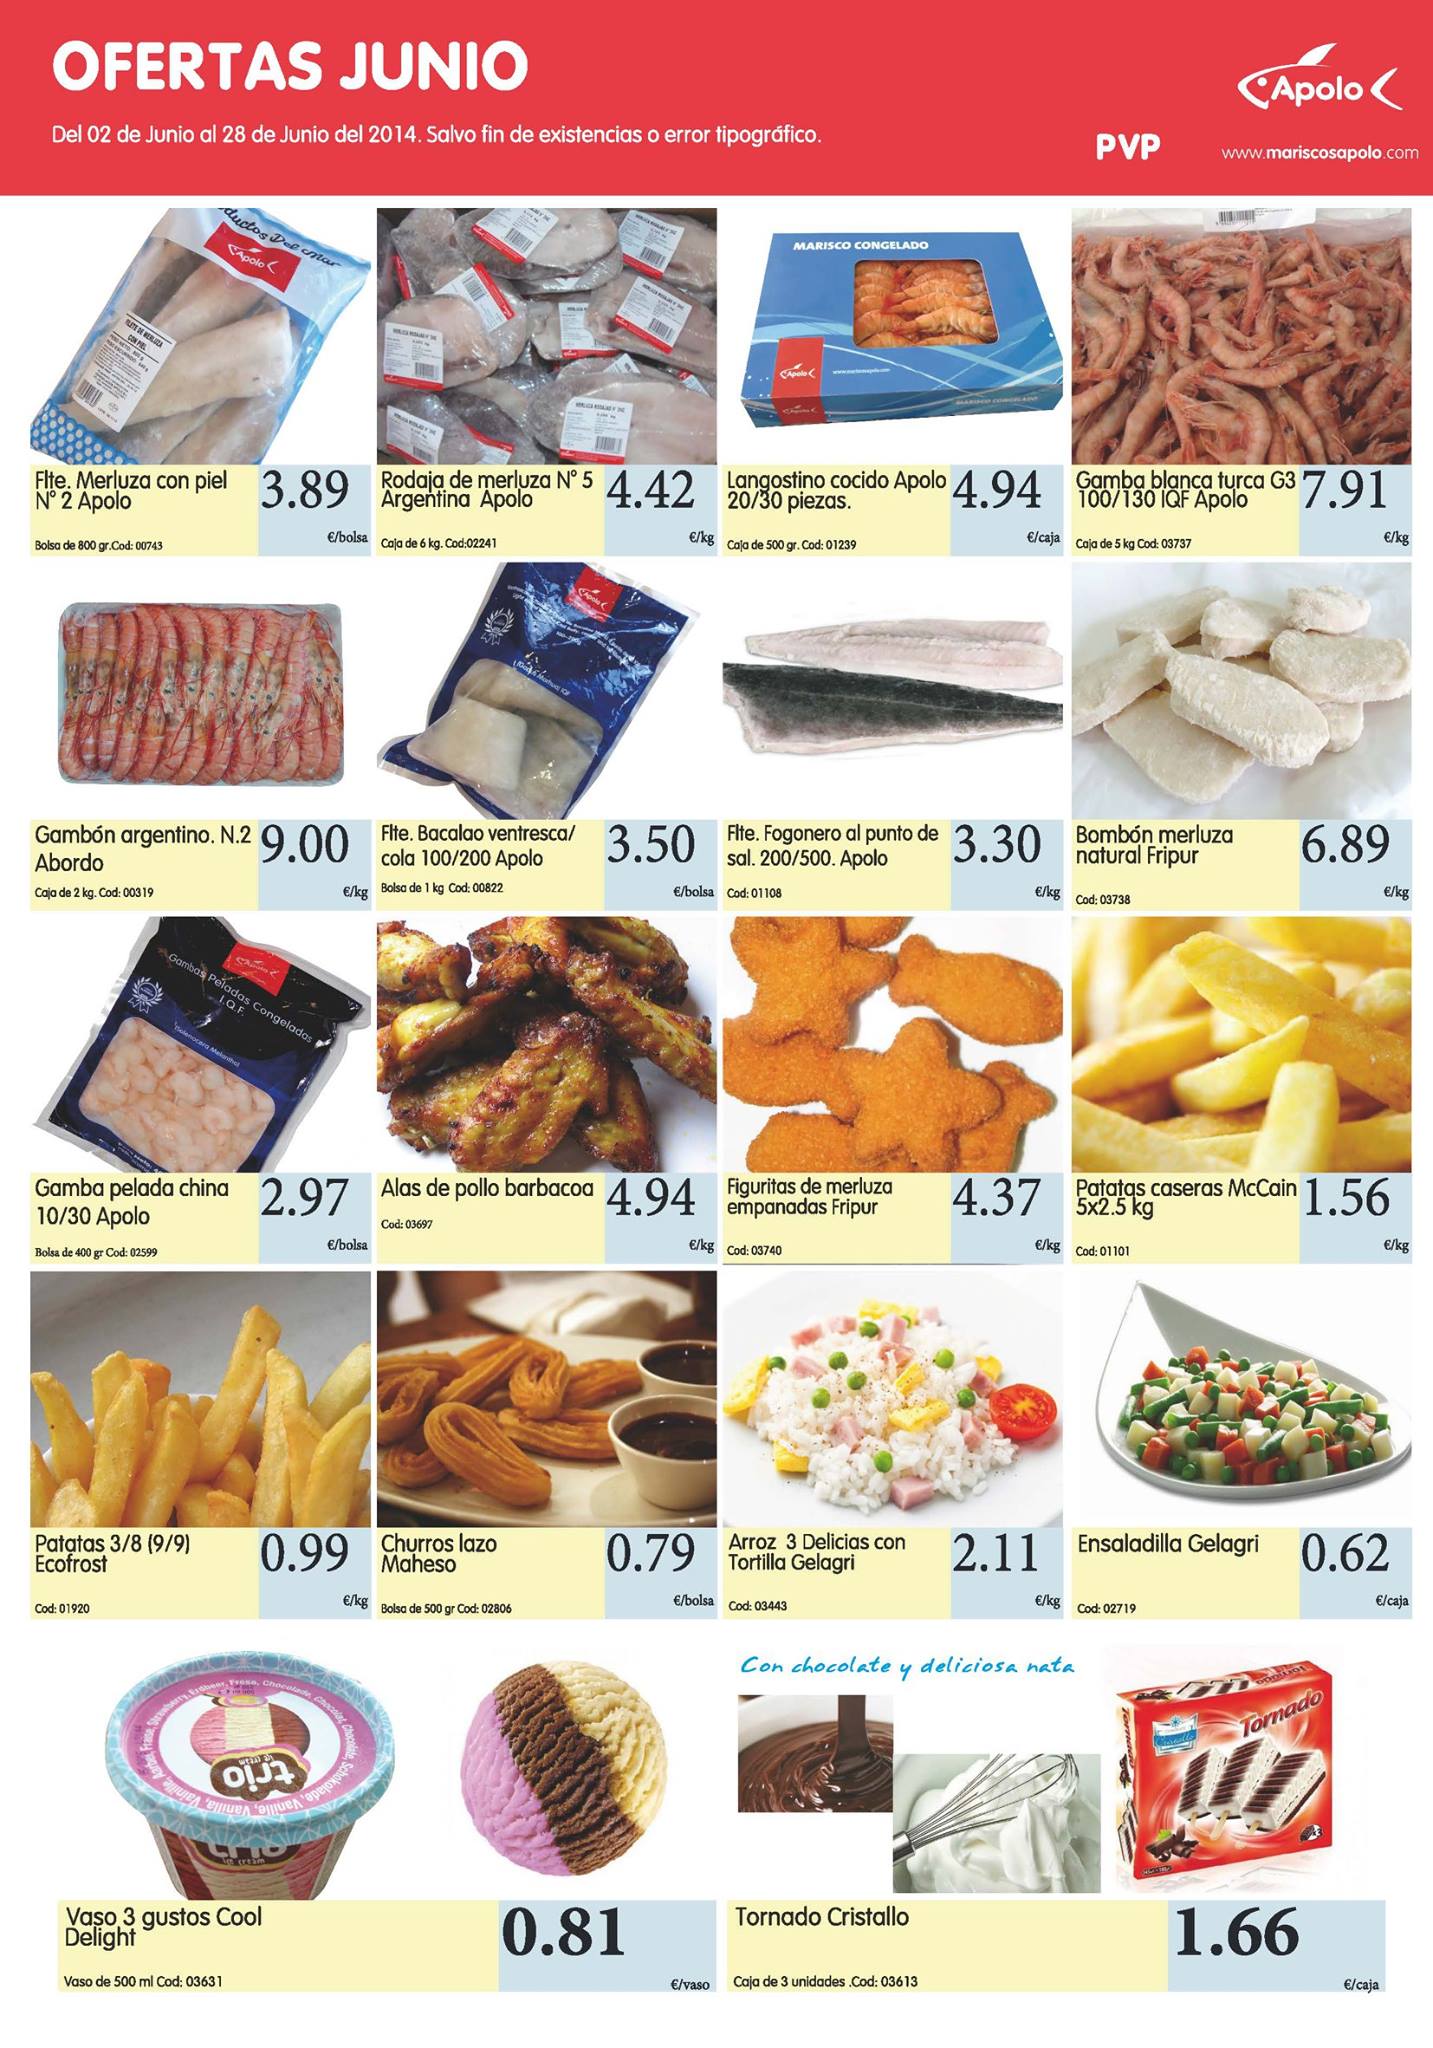 seafood on offer